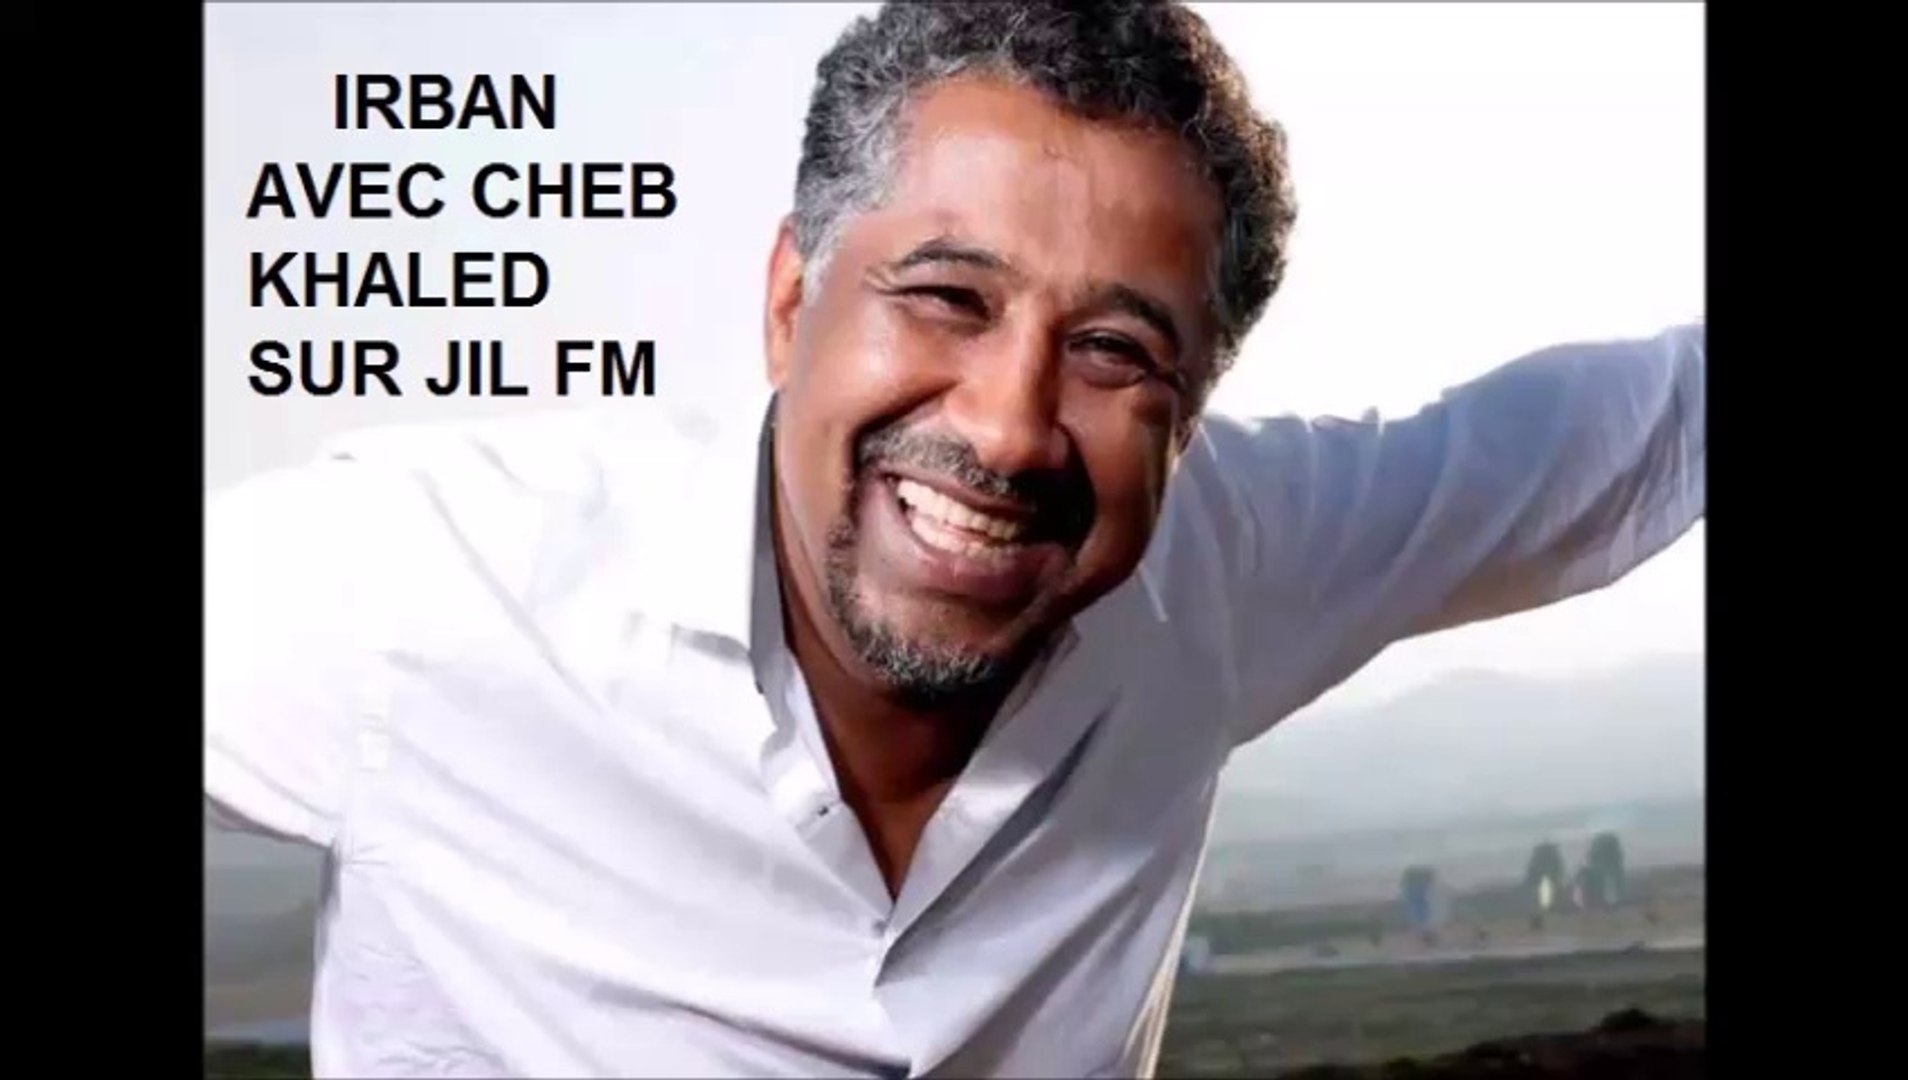 IRBAN AVEC CHEB KHALED SUR JIL FM LE 05/12/2014 - Vidéo Dailymotion